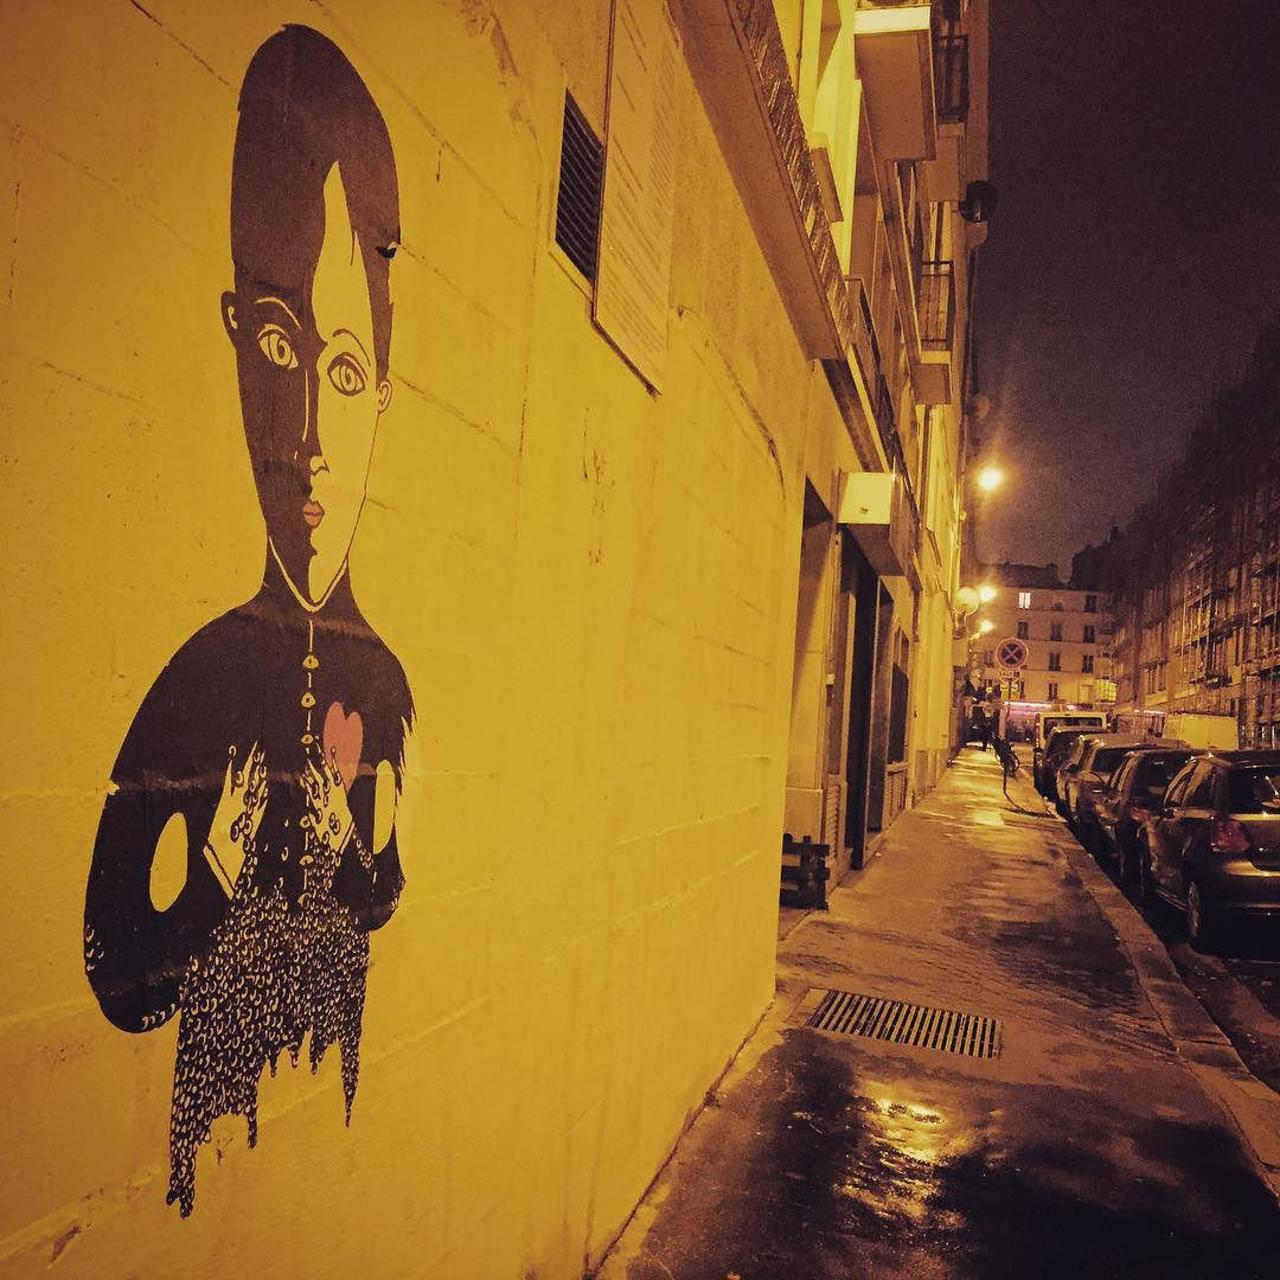 RT @circumjacent_fr: #Paris #graffiti photo by @ladiani http://ift.tt/1GJfVpv #StreetArt http://t.co/qj9qs6dZNa